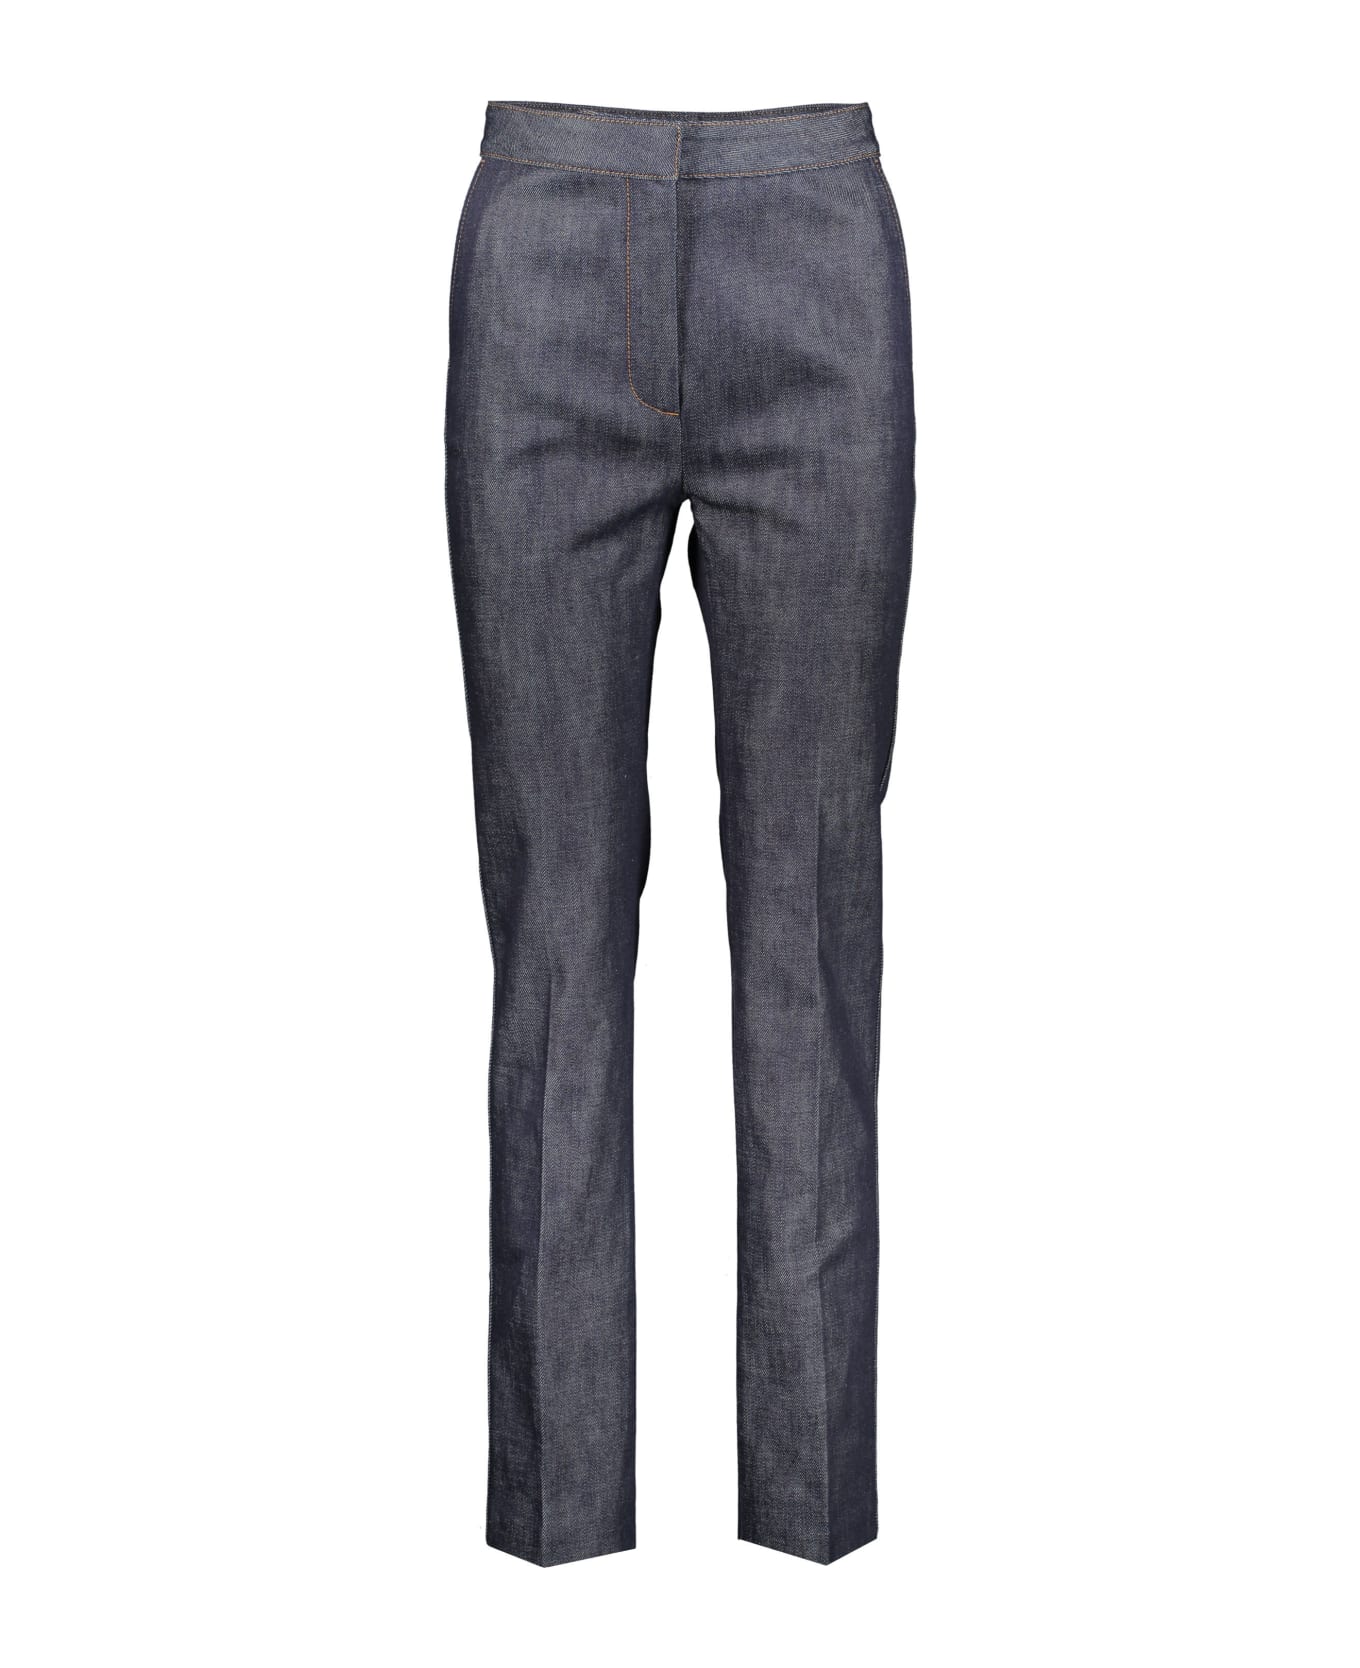 Burberry Straight Leg Jeans - Denim